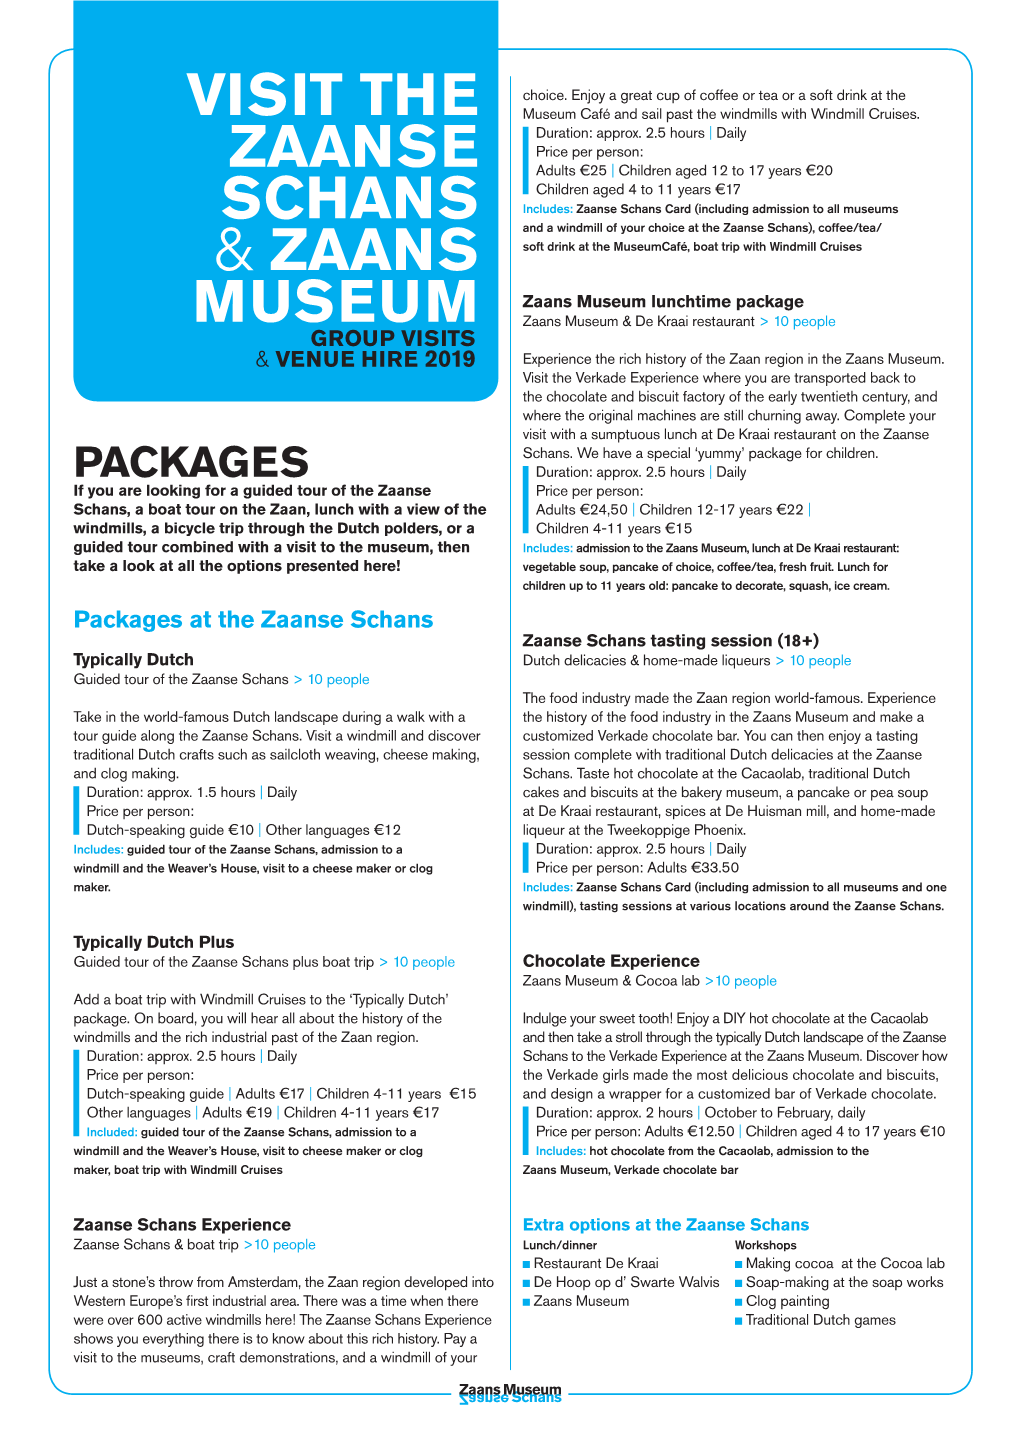 Visit the Zaanse Schans & Zaans Museum